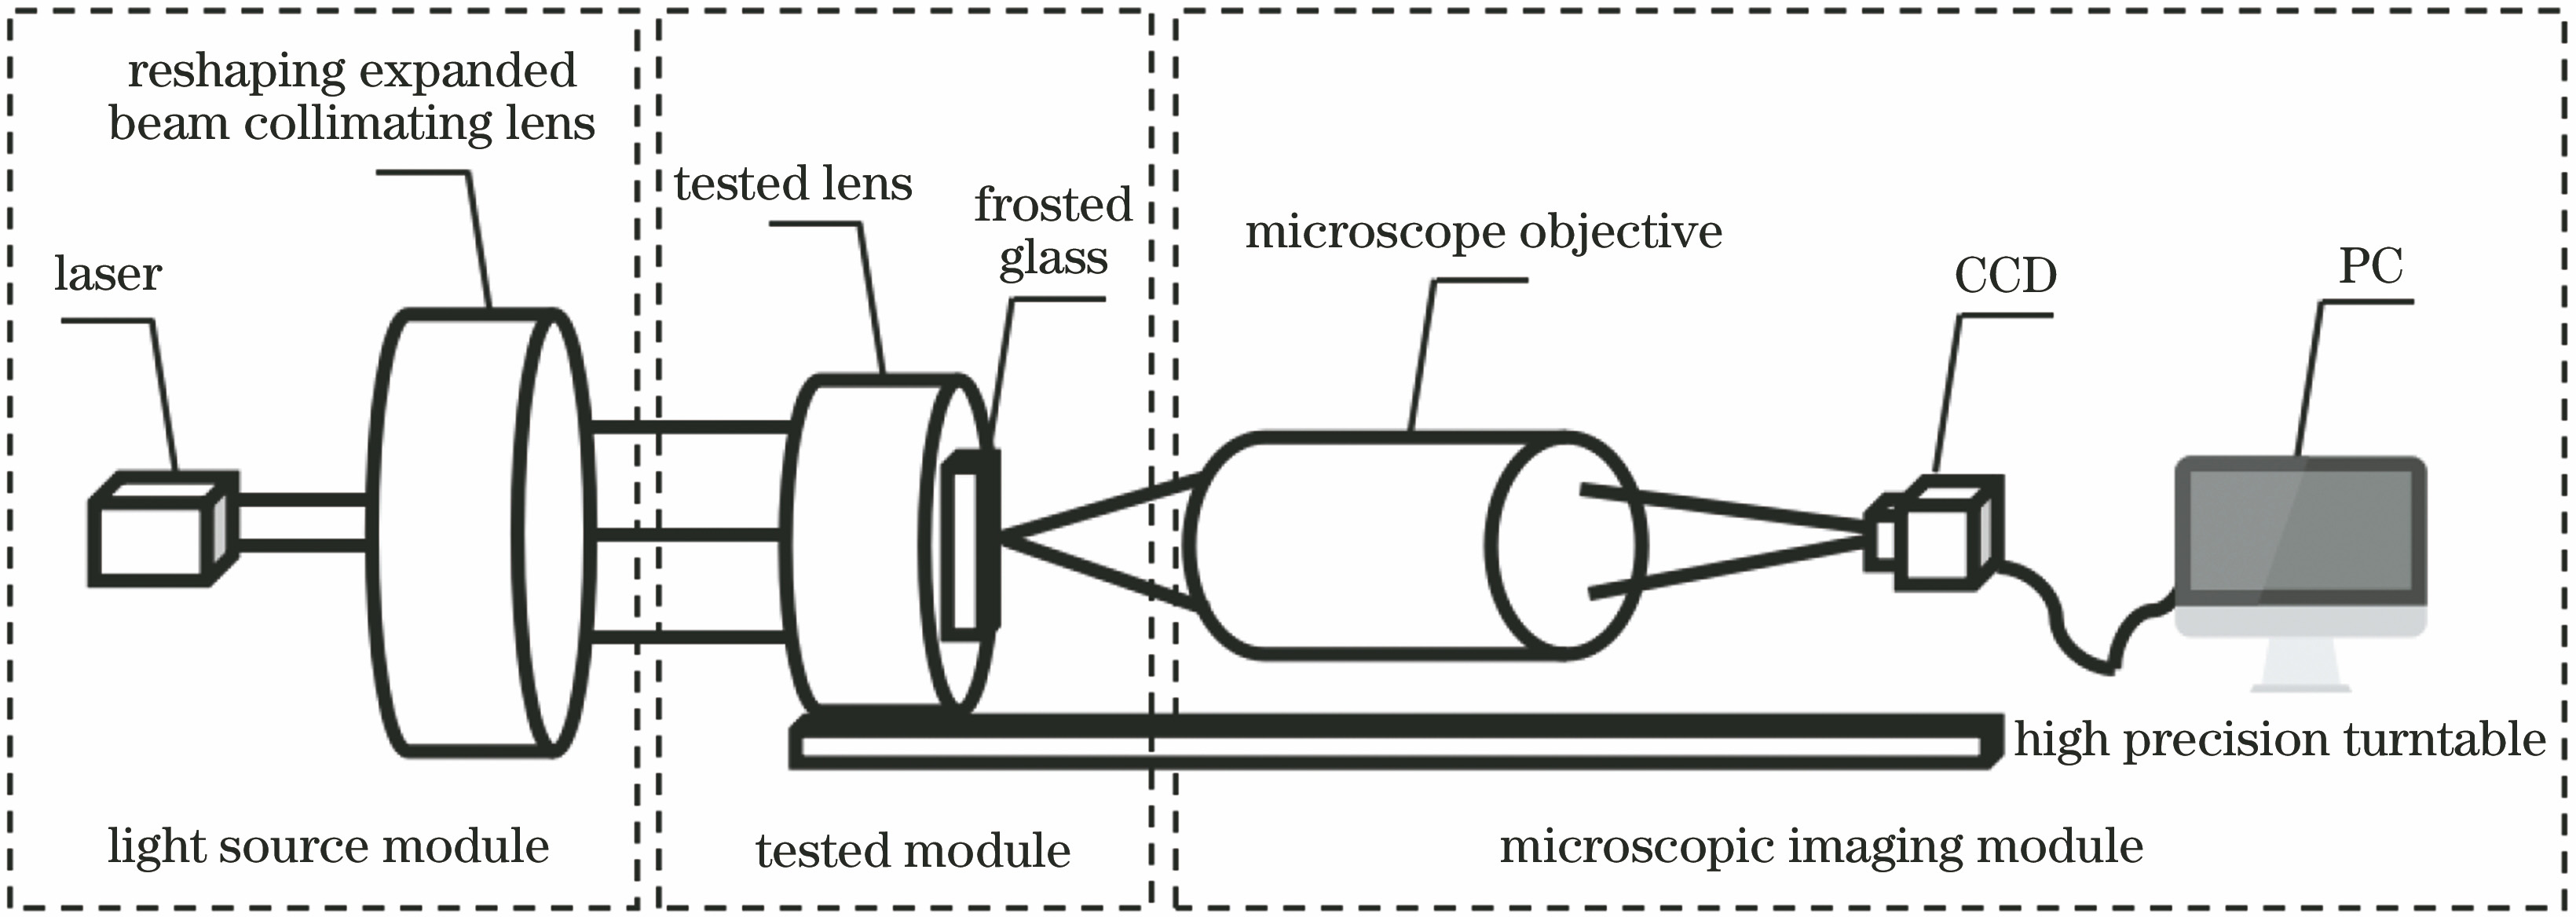 Basic principle diagram of optical quality detection system